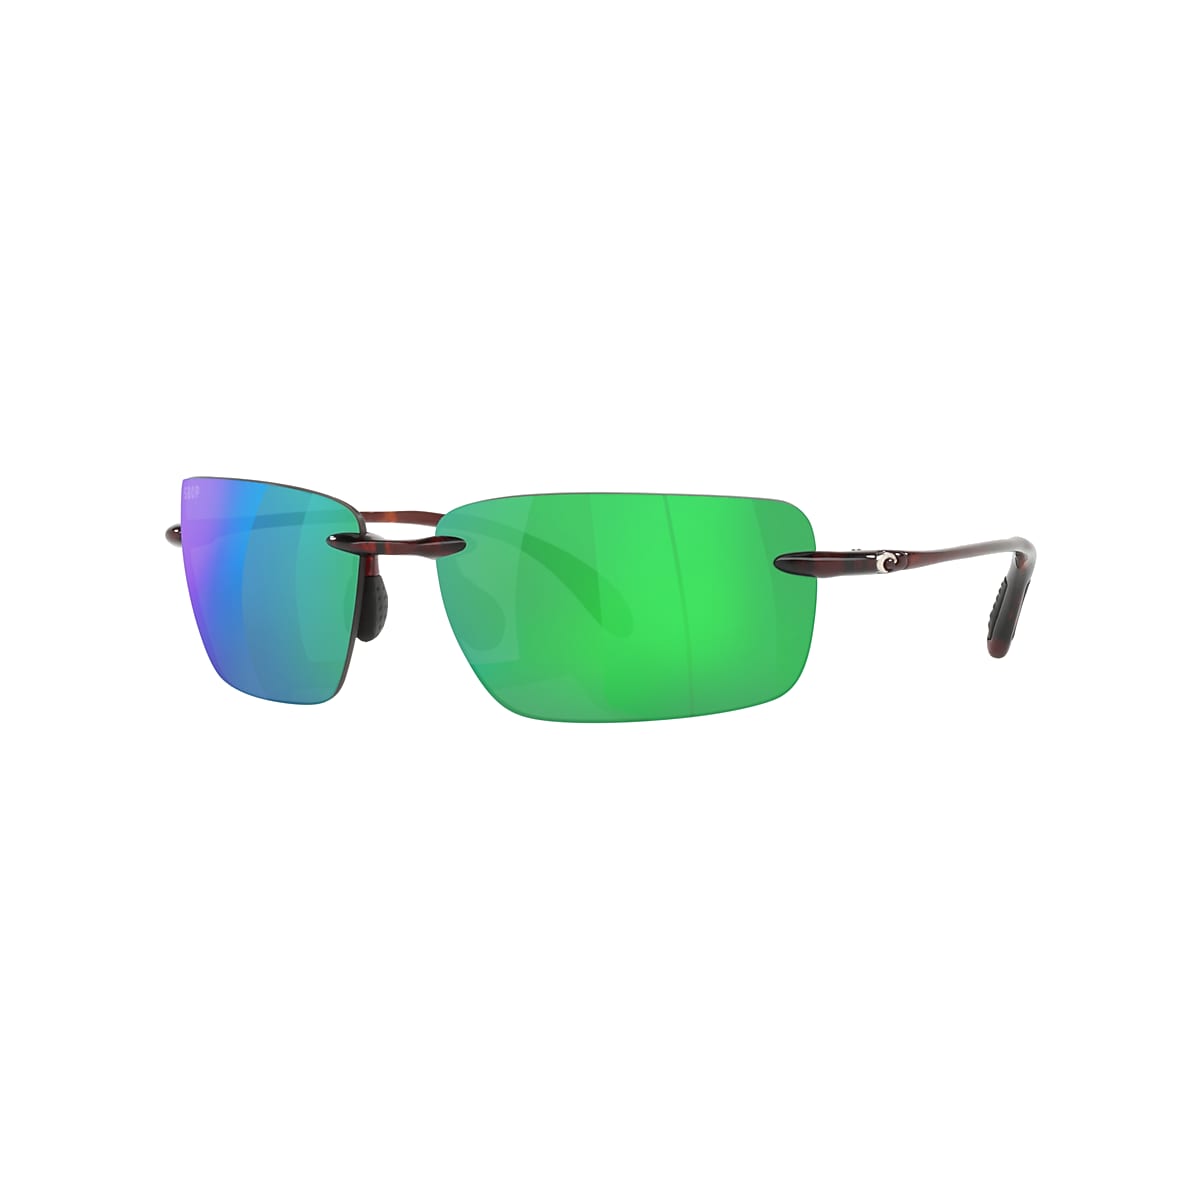 SOLGIR Joy 9120 DESIGNER Style One-Piece Shield Sunglasses Green Marble